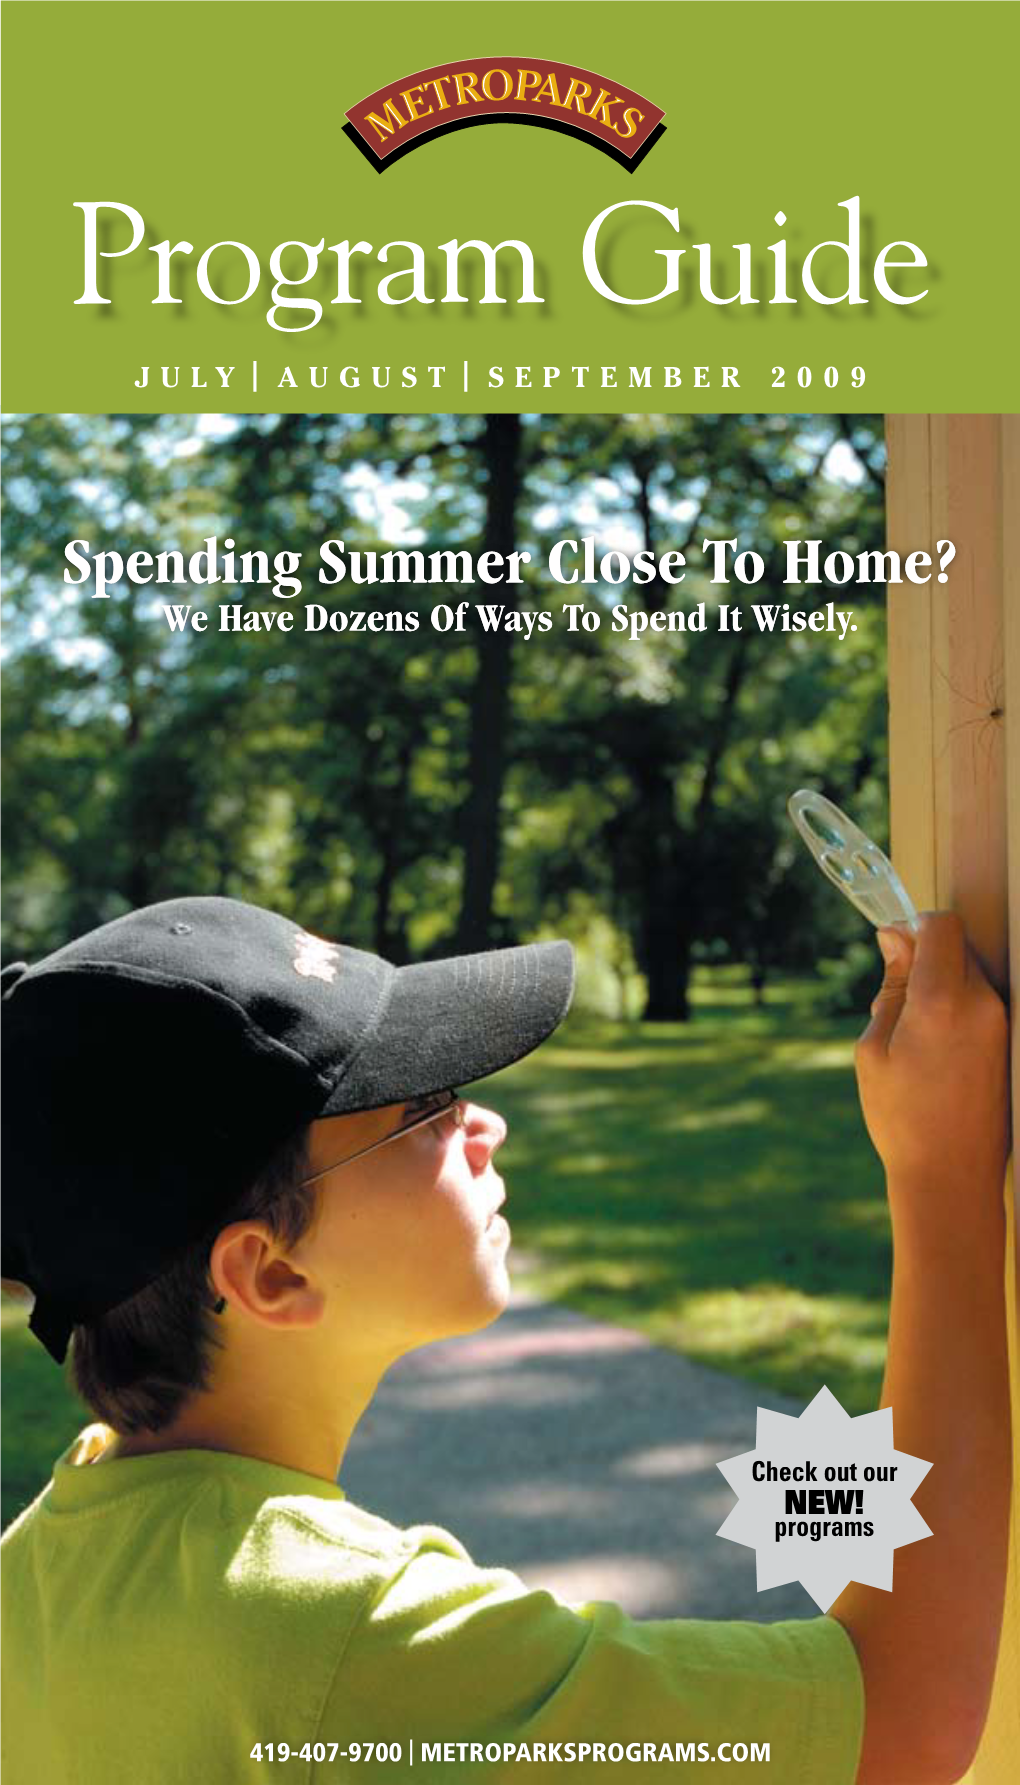 Download the Summer 2009 Program Guide